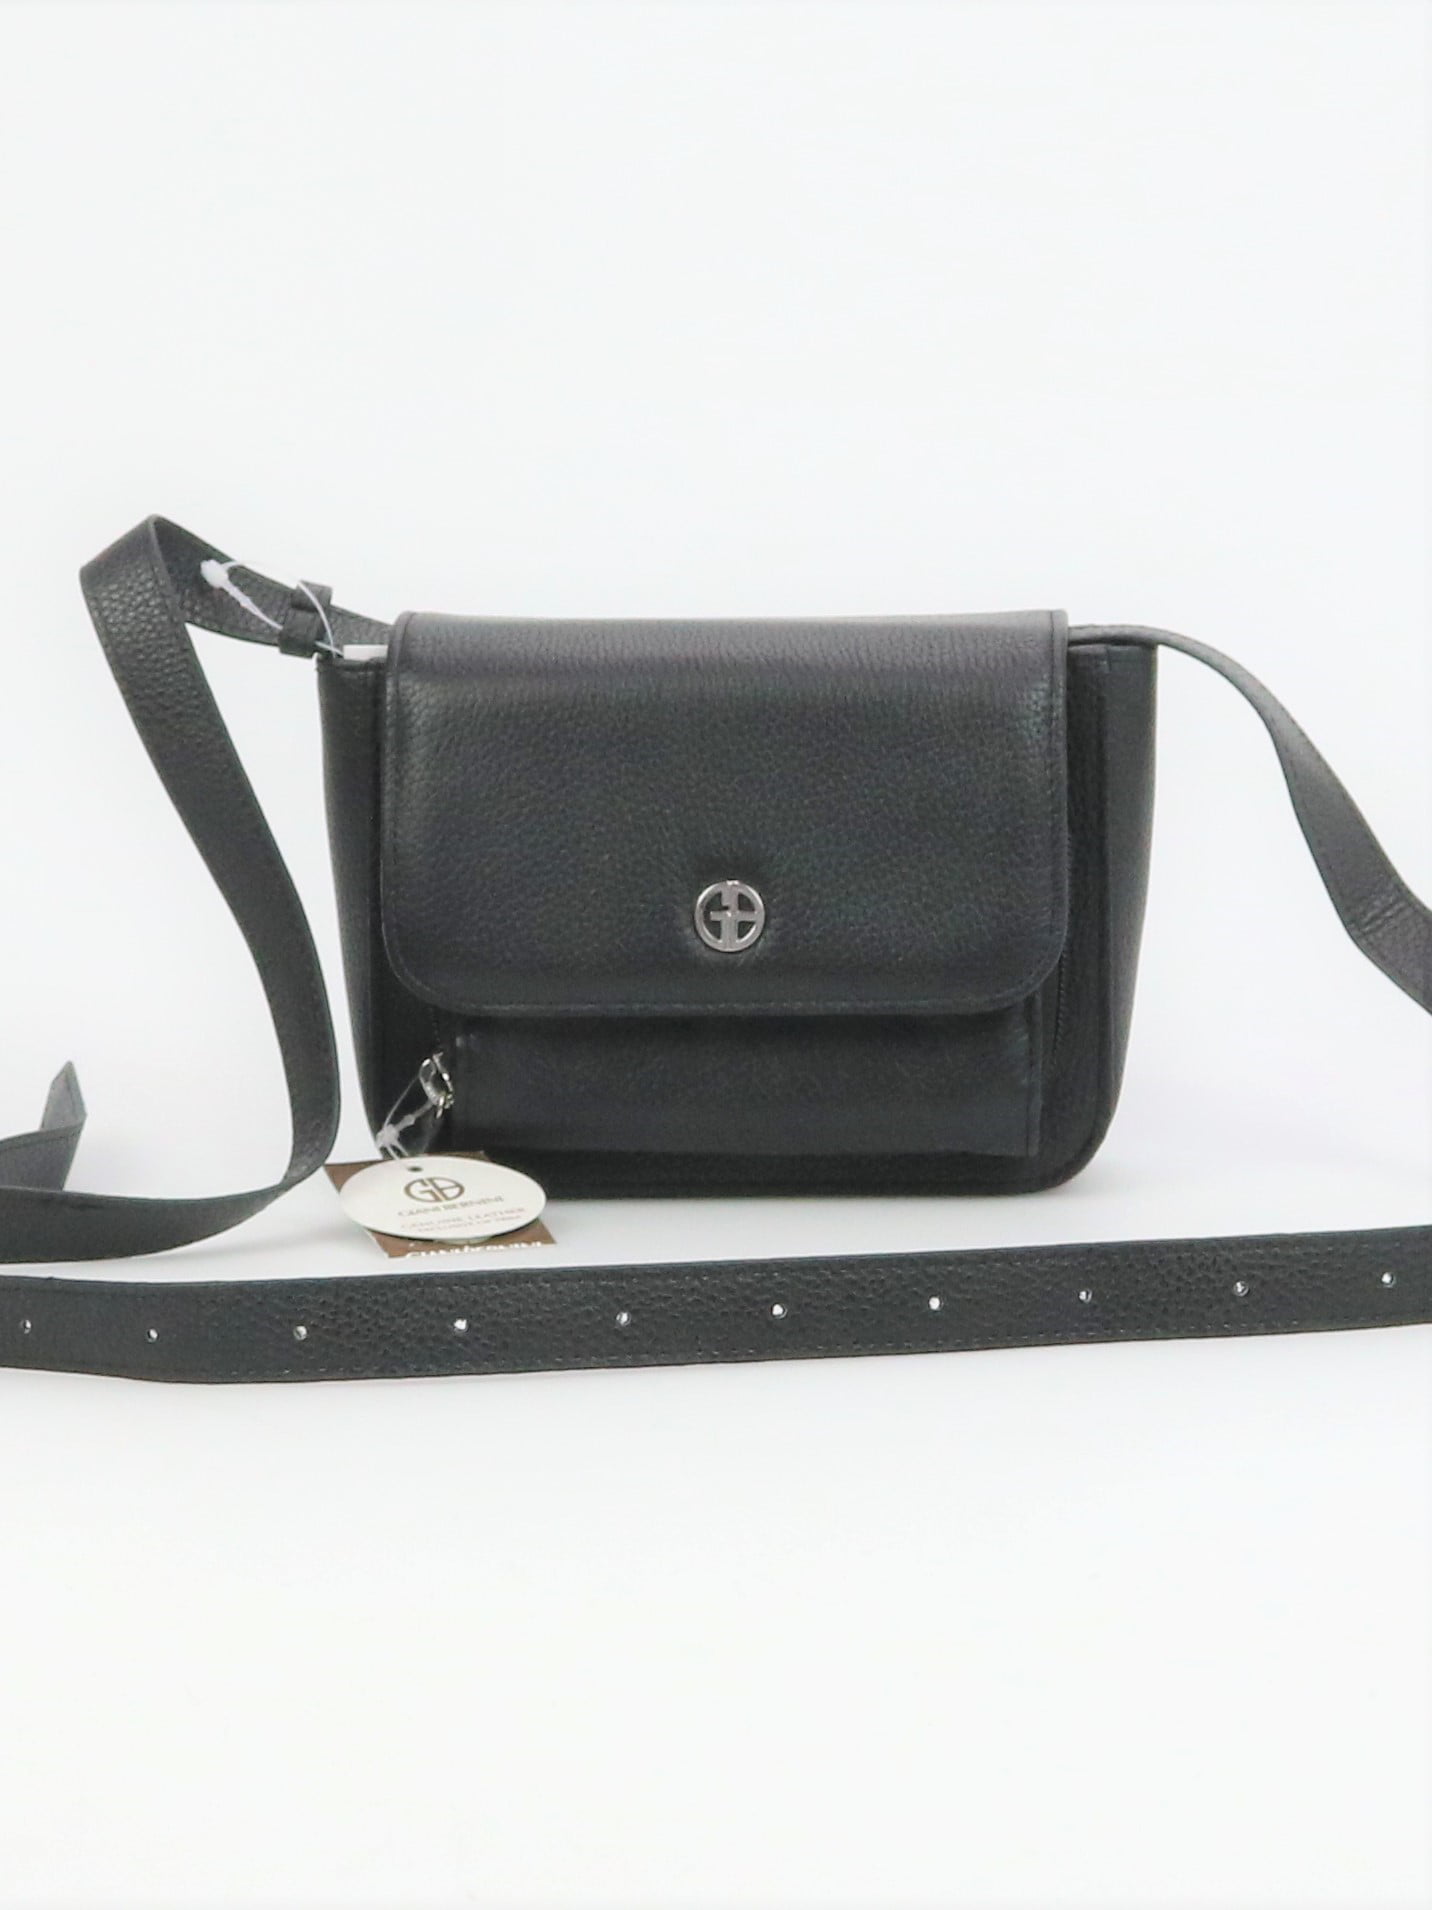 Giani Bernini Leather Convertible Belt Bag (Black)